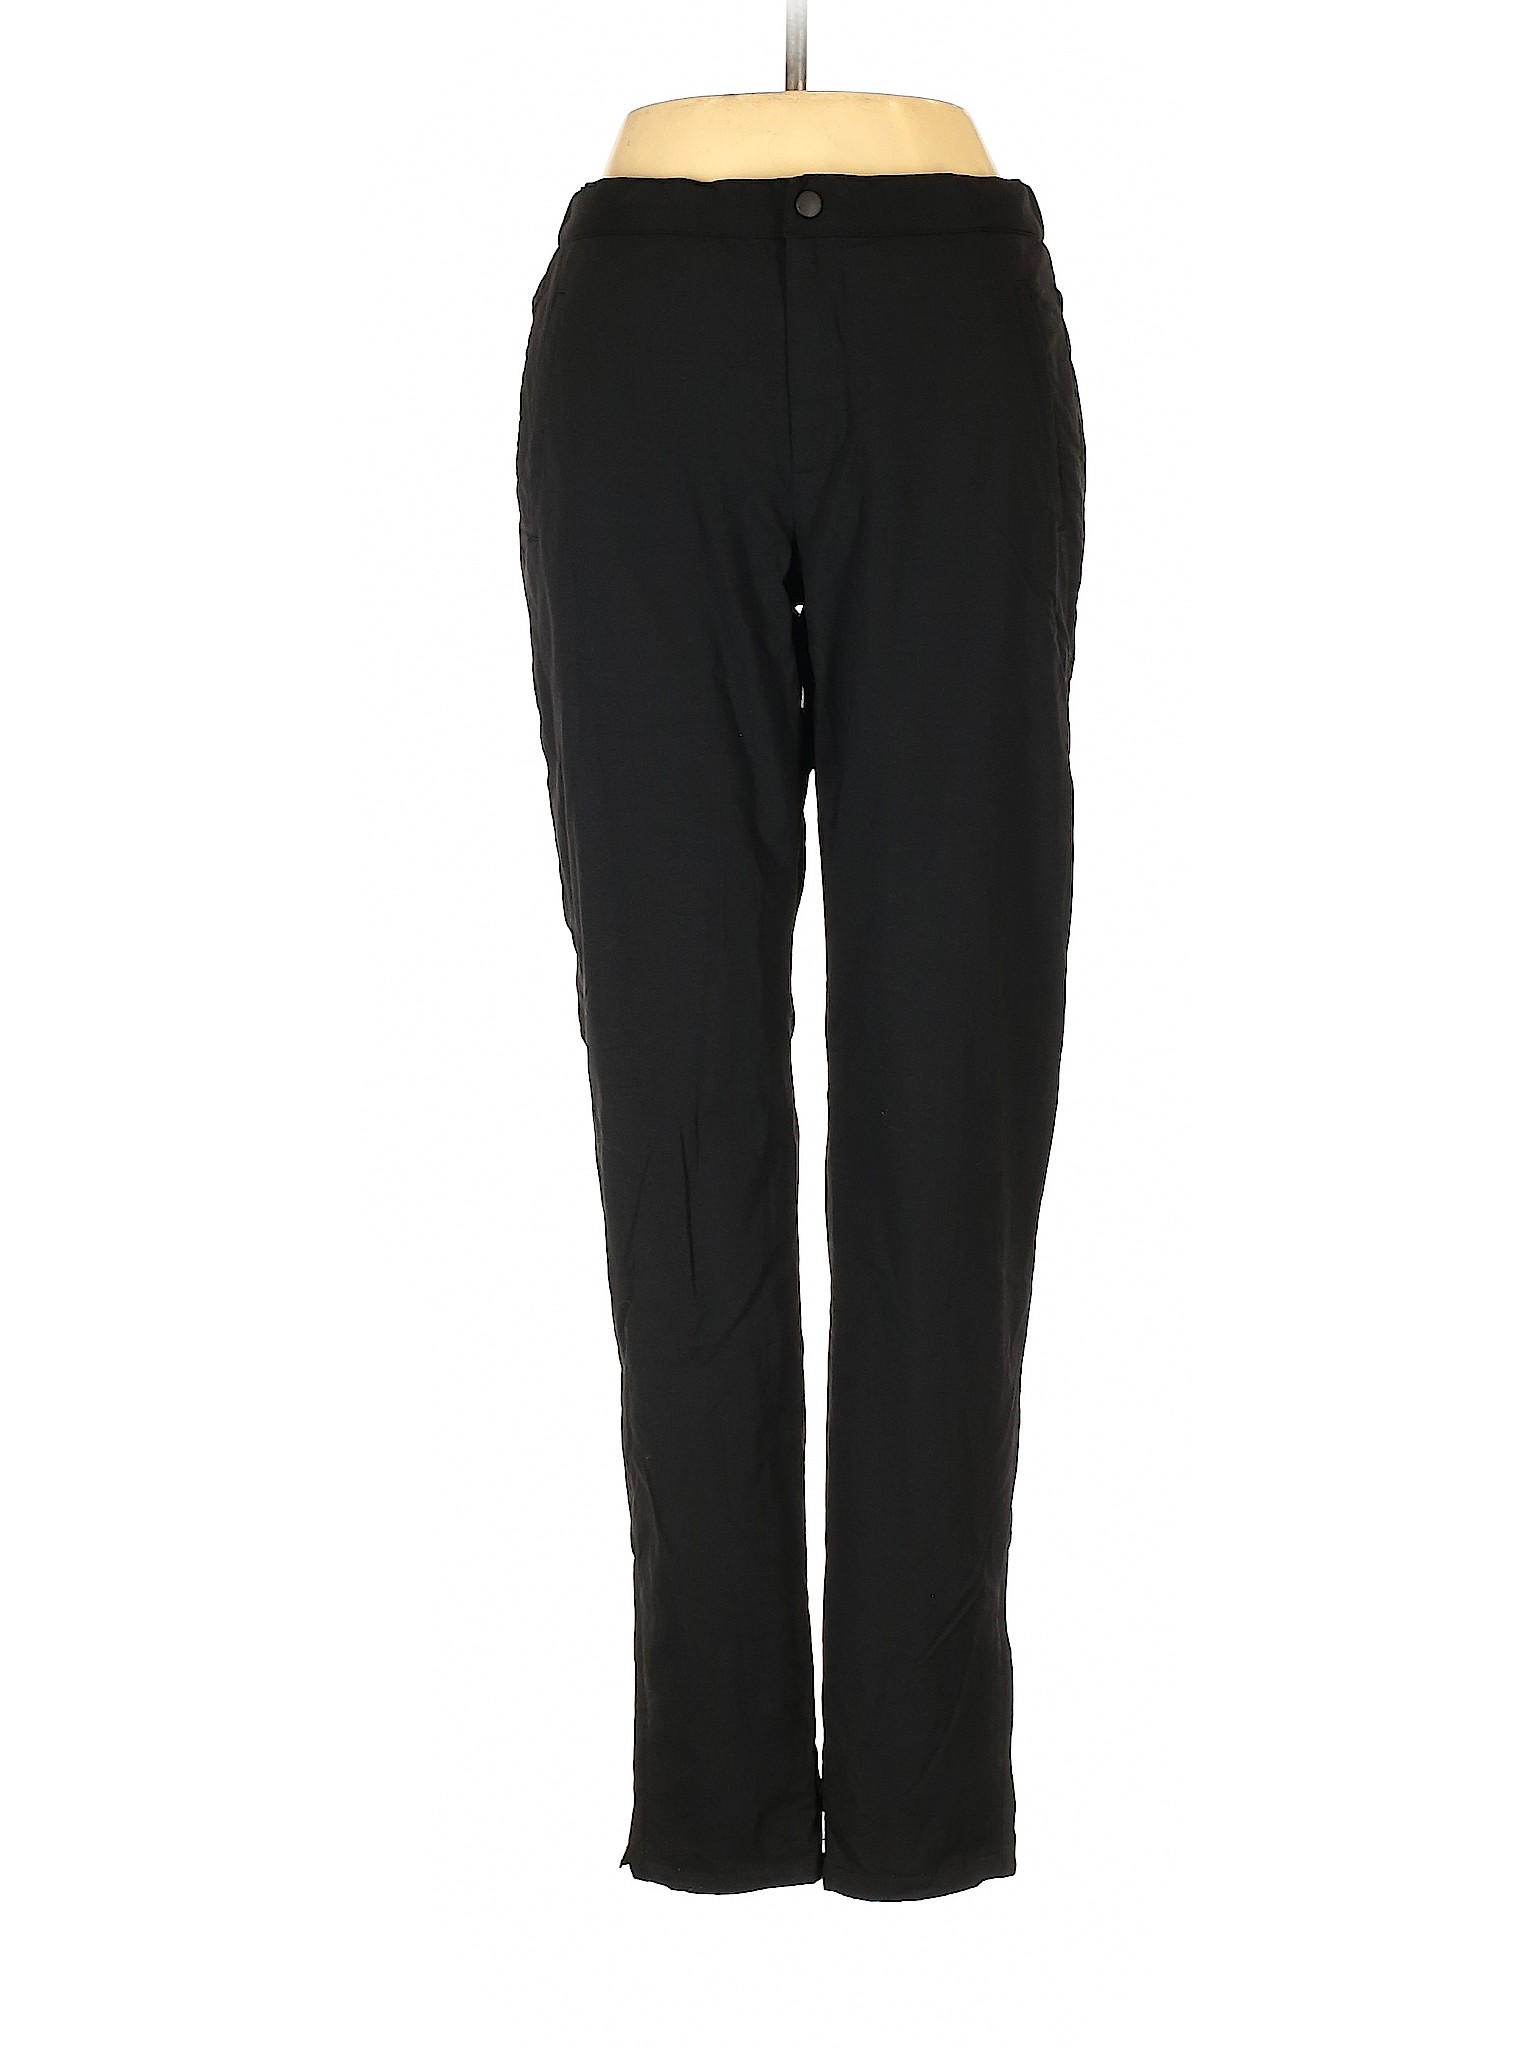 Uniqlo Women Black Casual Pants S | eBay